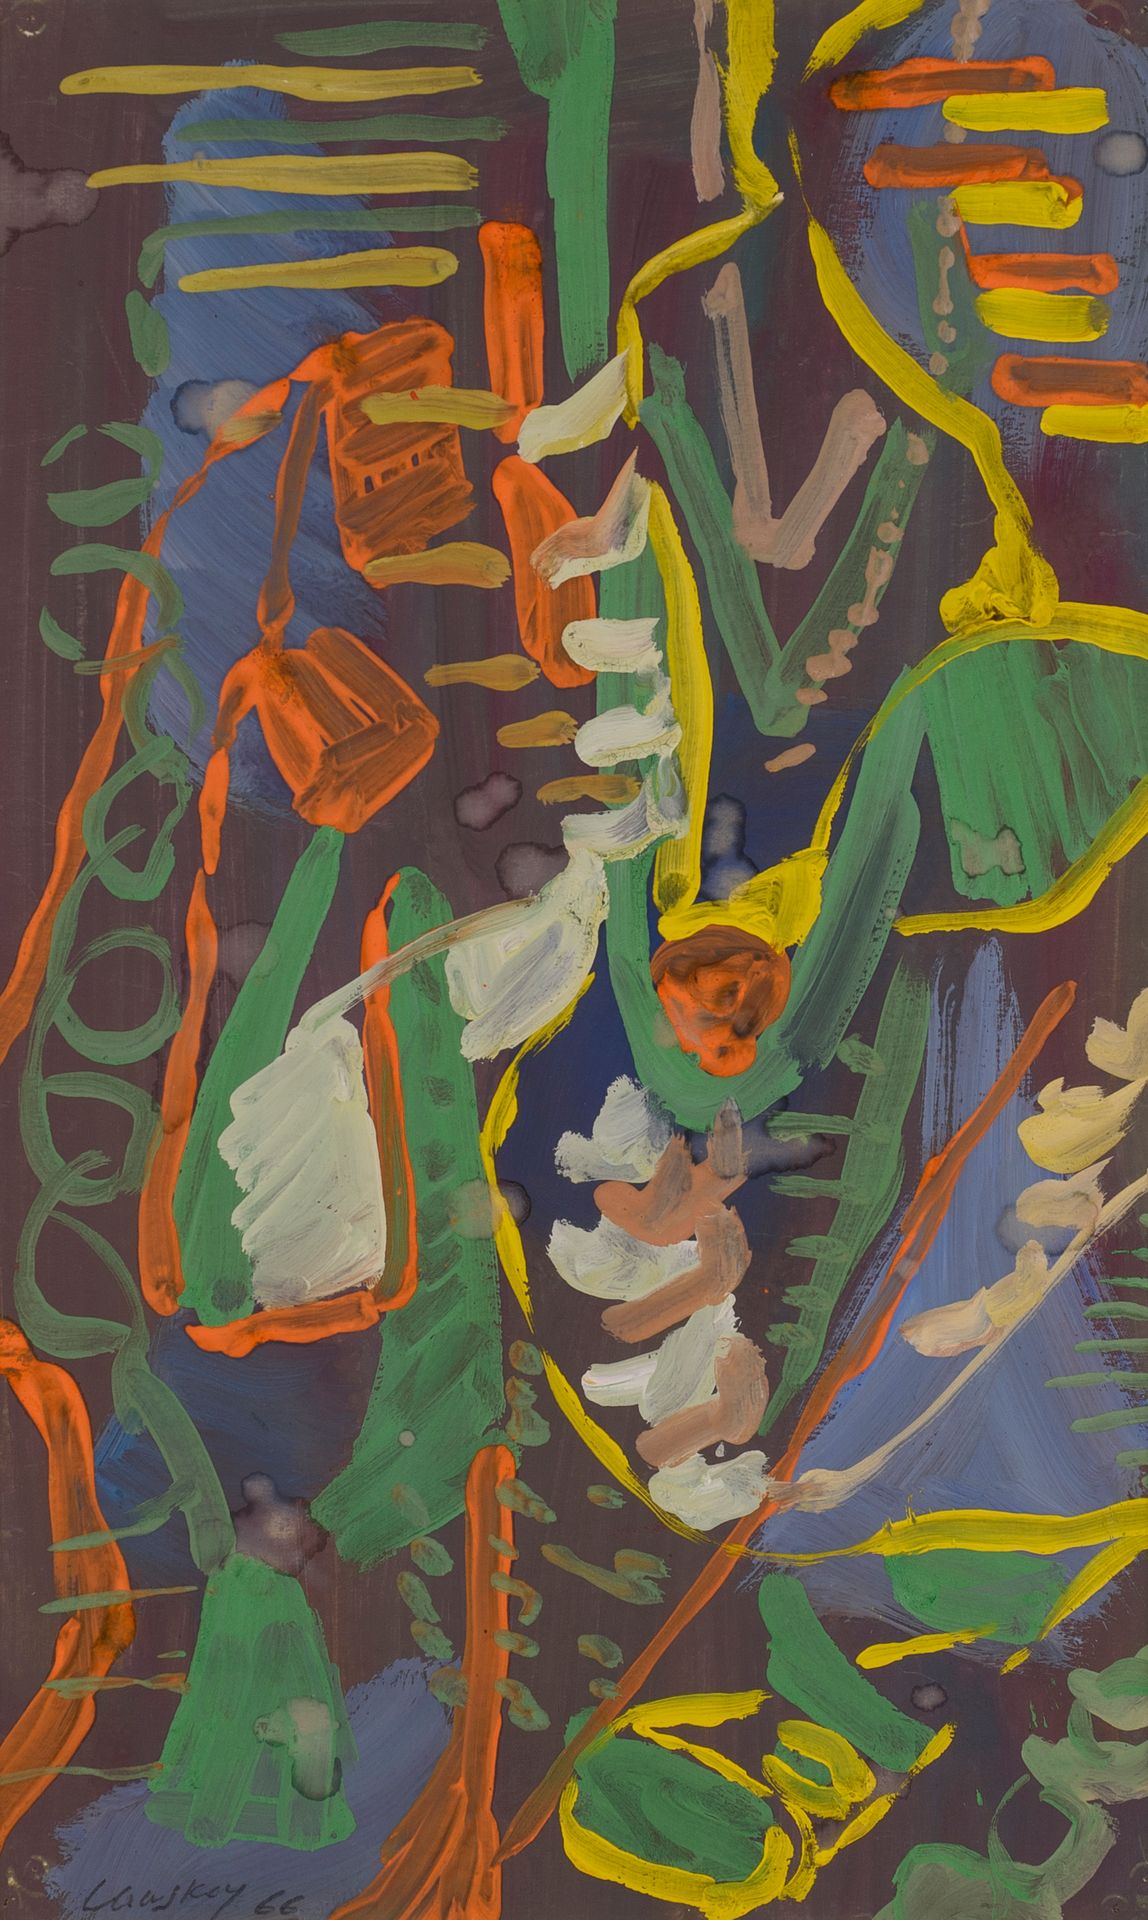 Null 安德烈-兰斯科伊 (1902 - 1976)

无题》，1966年

纸上水粉画，左下方有签名和日期 44.5 x 27 cm



出处：私人收藏，&hellip;